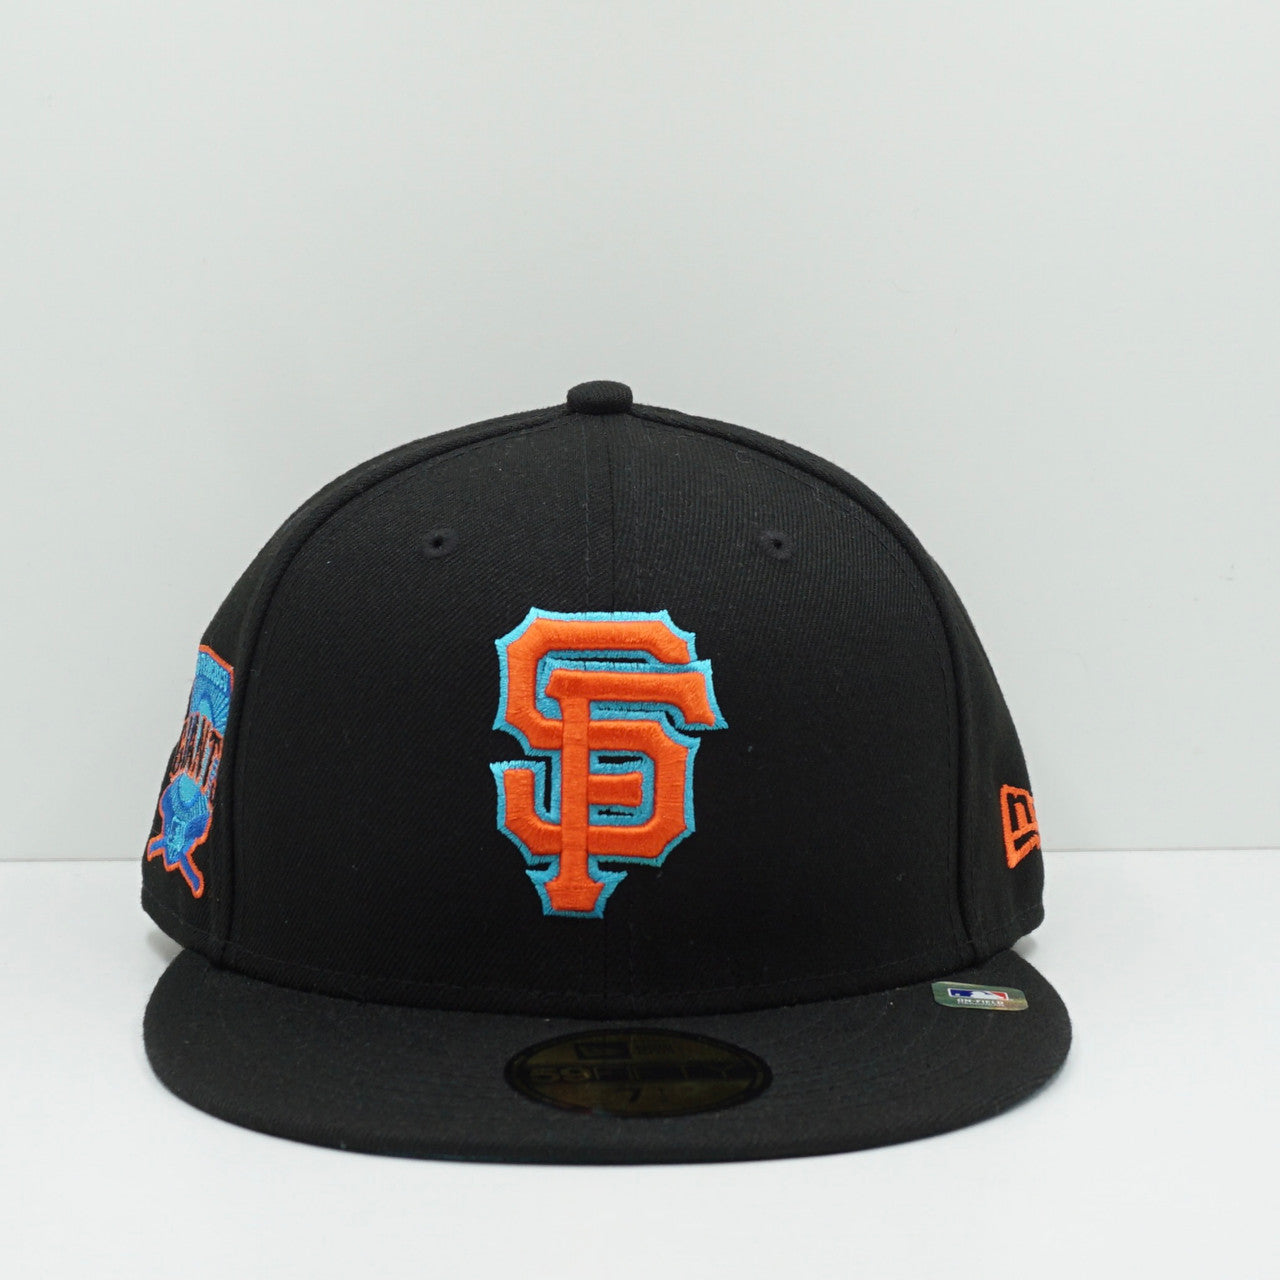 New Era San Francisco Giants Black/Orange Fitted Cap